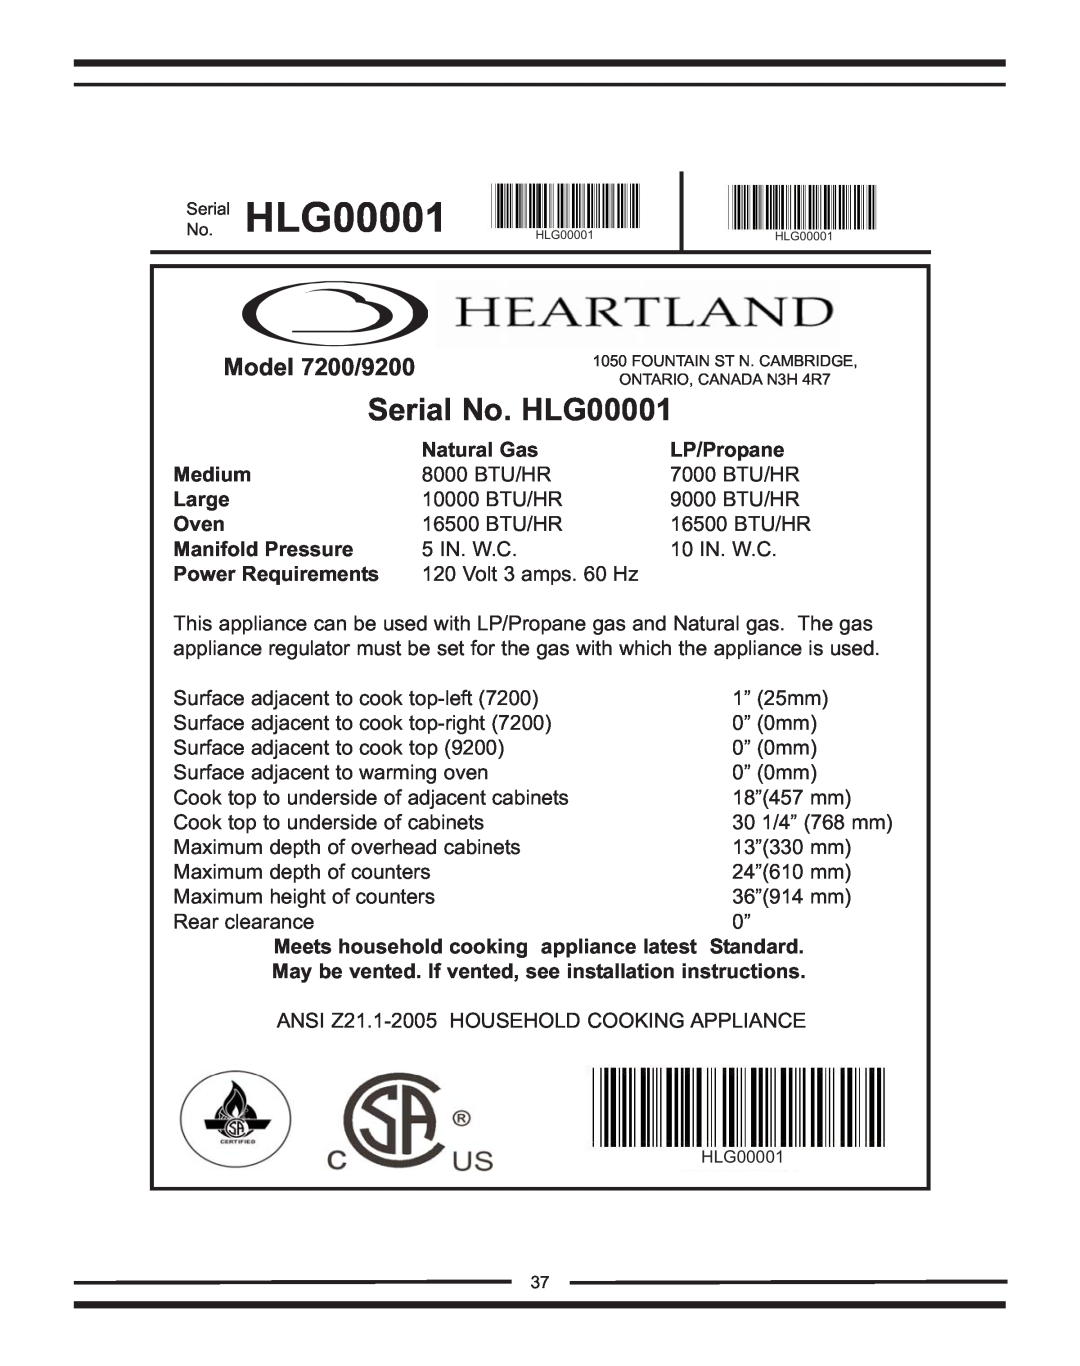 Heartland Bakeware 9200/7200 manual Serial HLG00001, Serial No. HLG00001, Model 7200/9200 